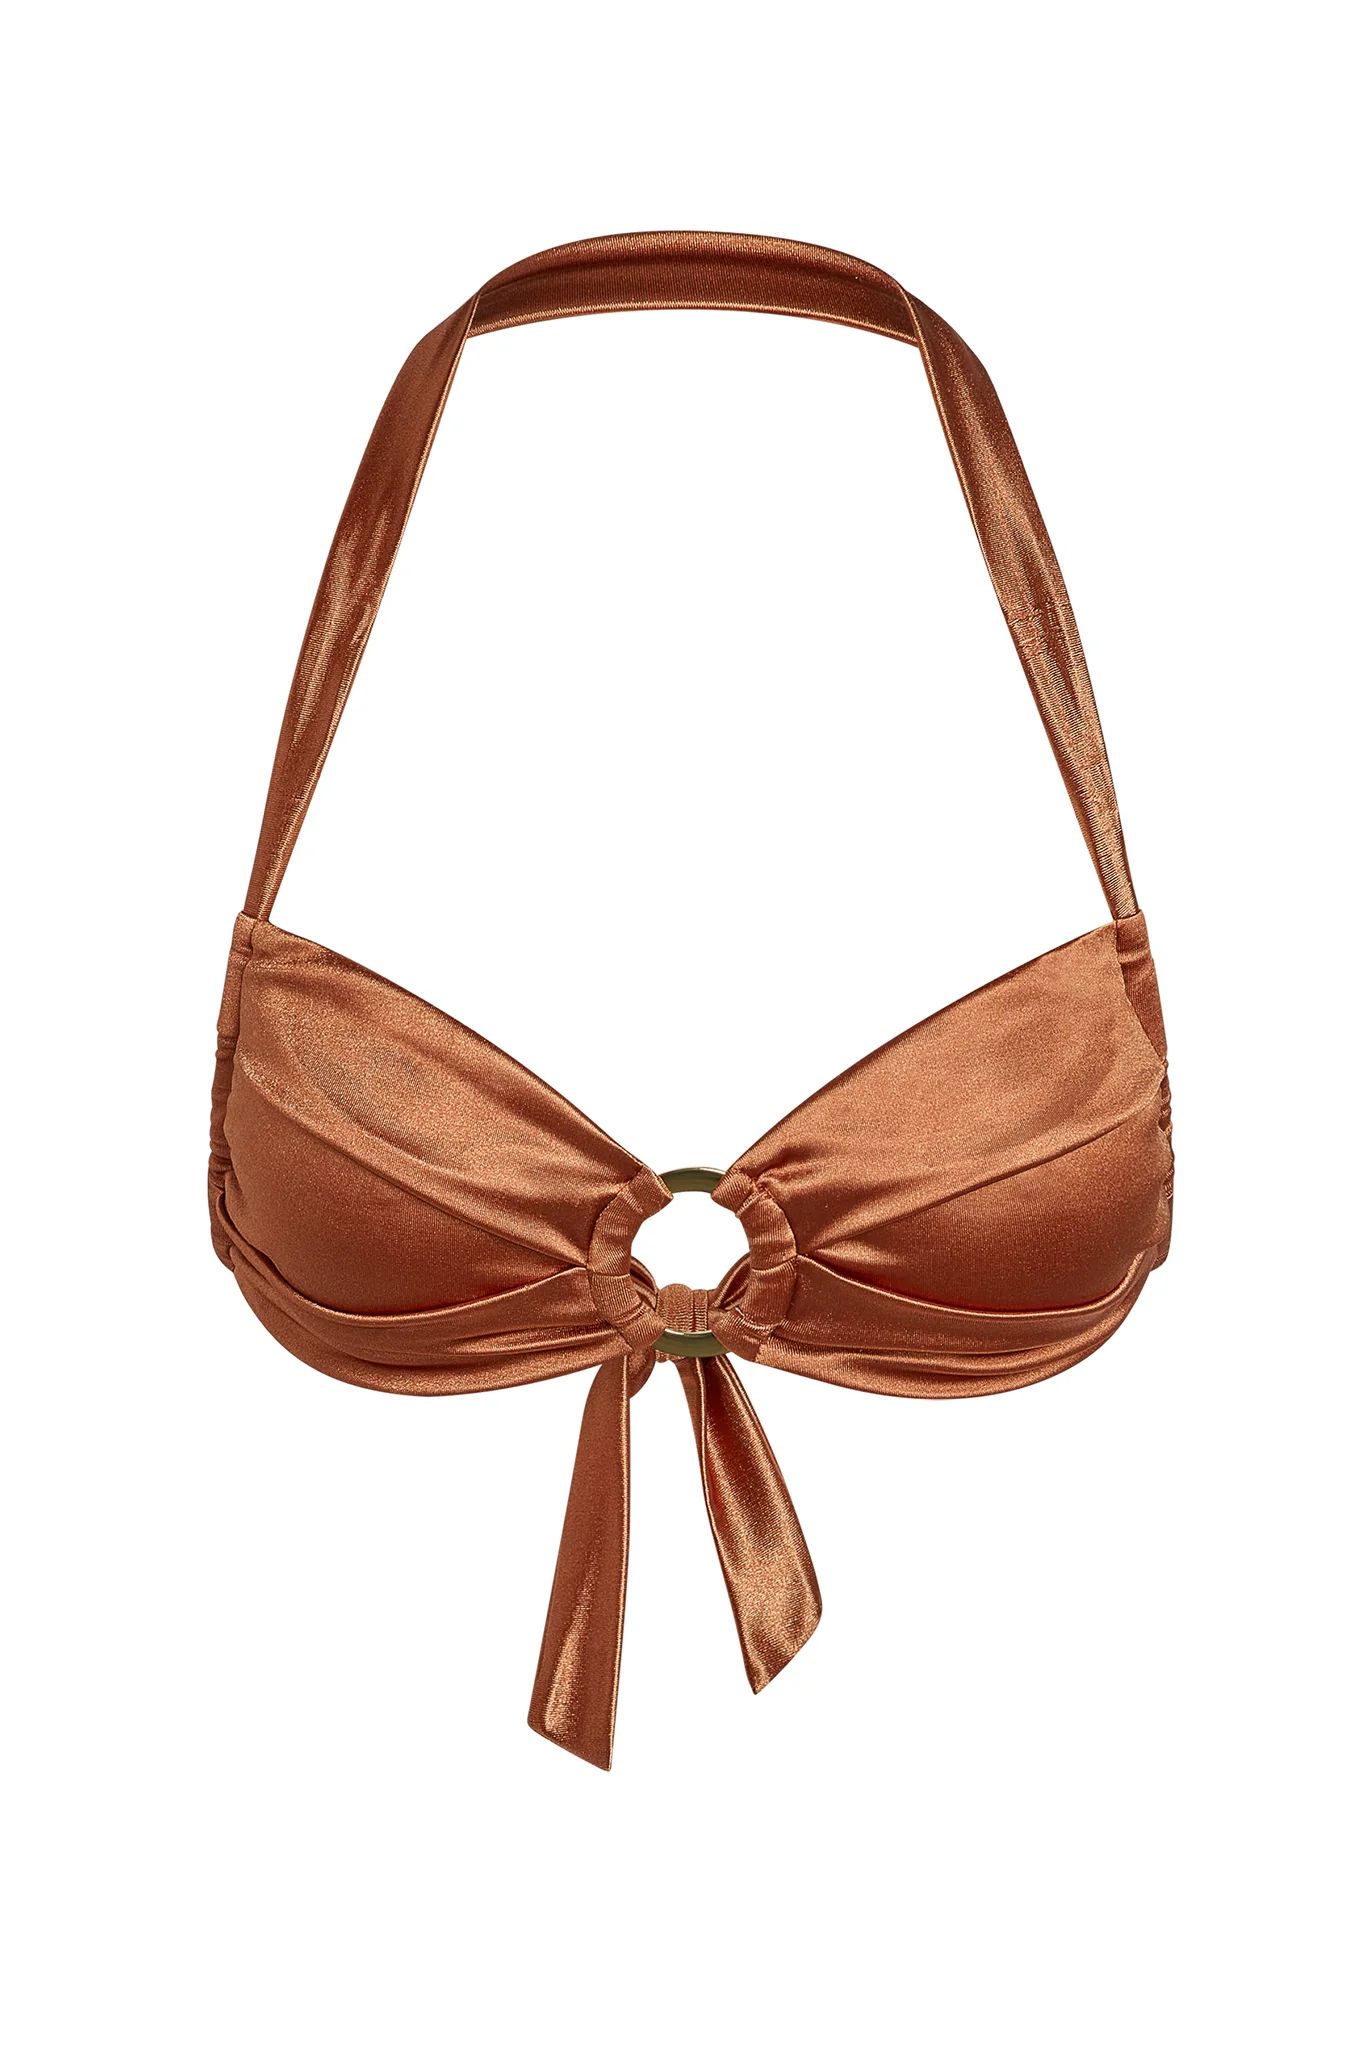 Bronte Top - Bronze Shiny Jersey | Monday Swimwear